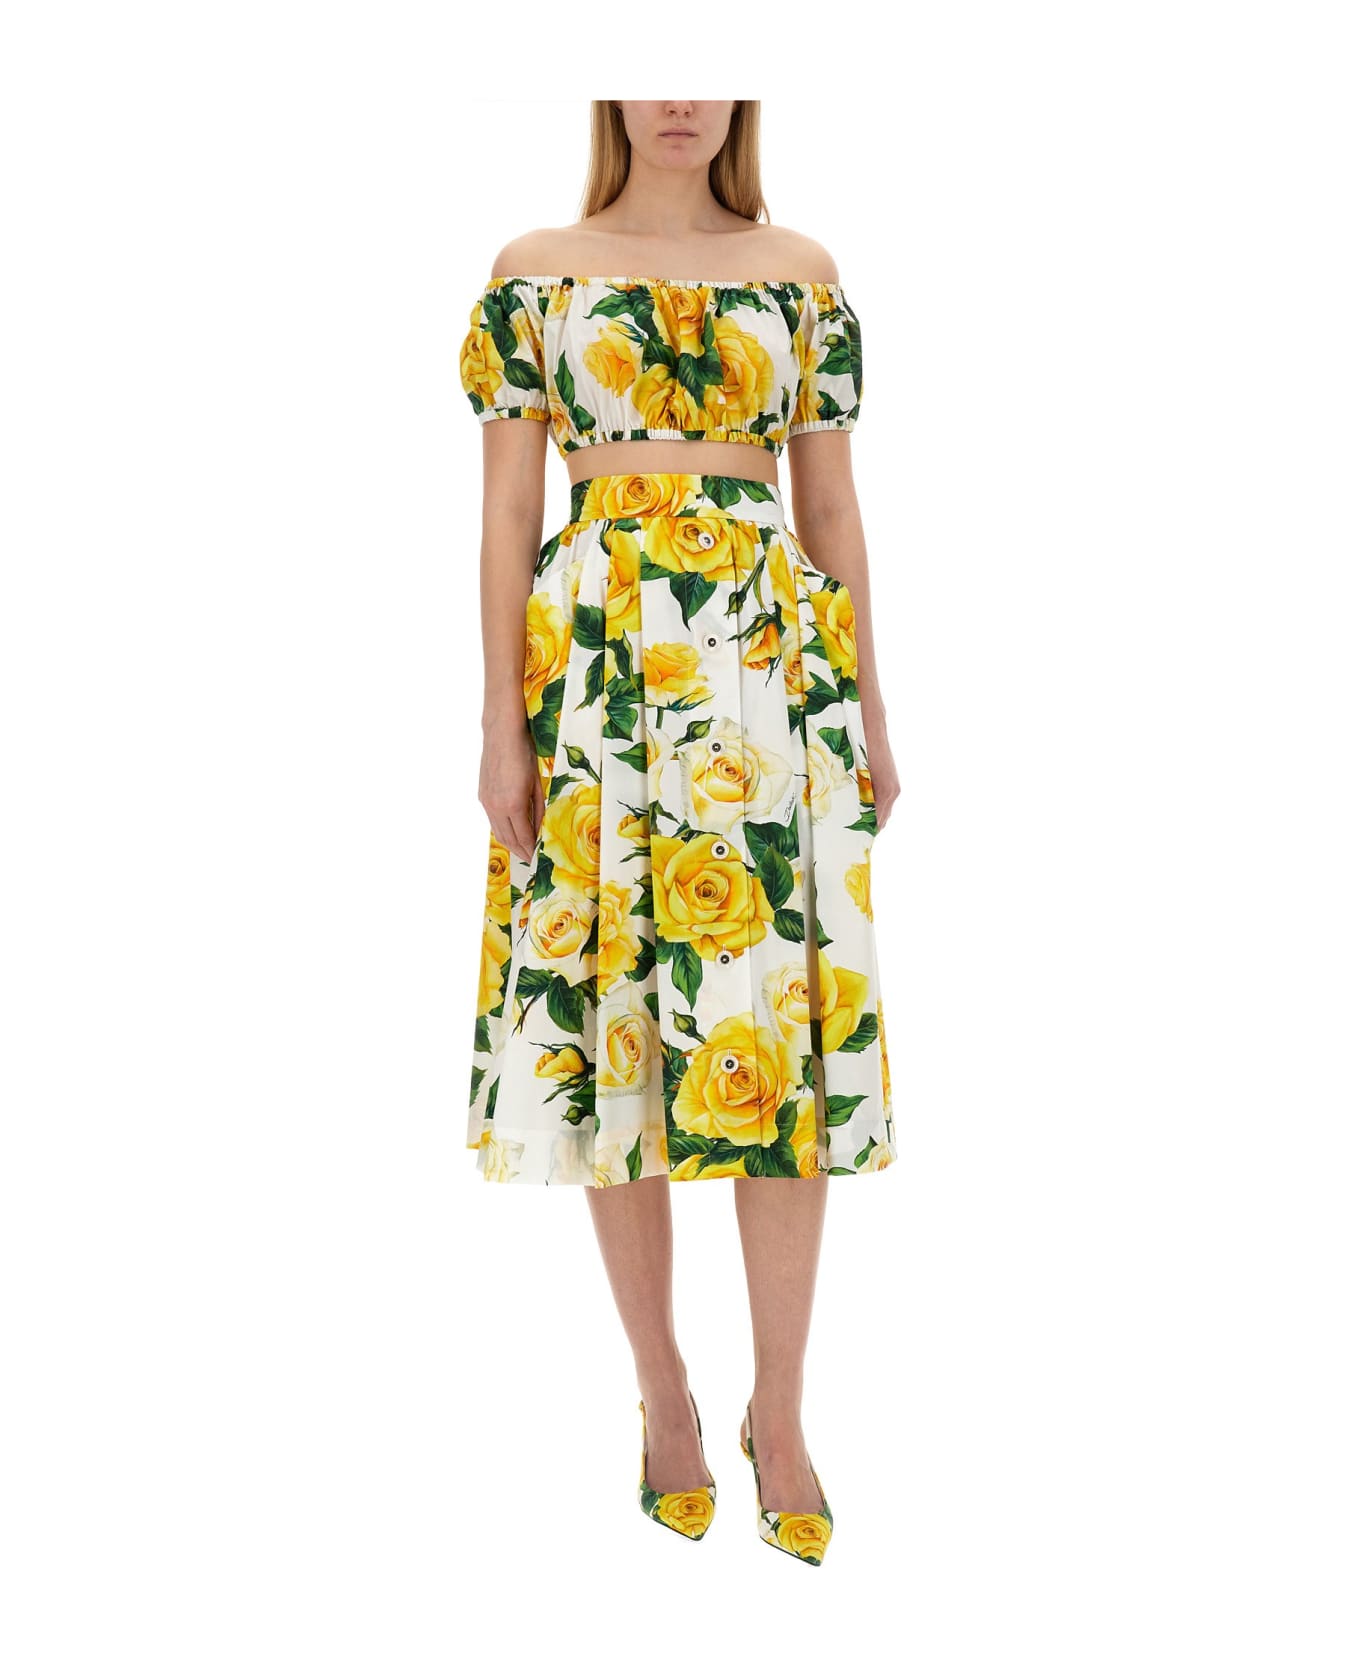 Dolce & Gabbana Flower Print Full Skirt - Dolce & Gabbana long-sleeved cotton shirt